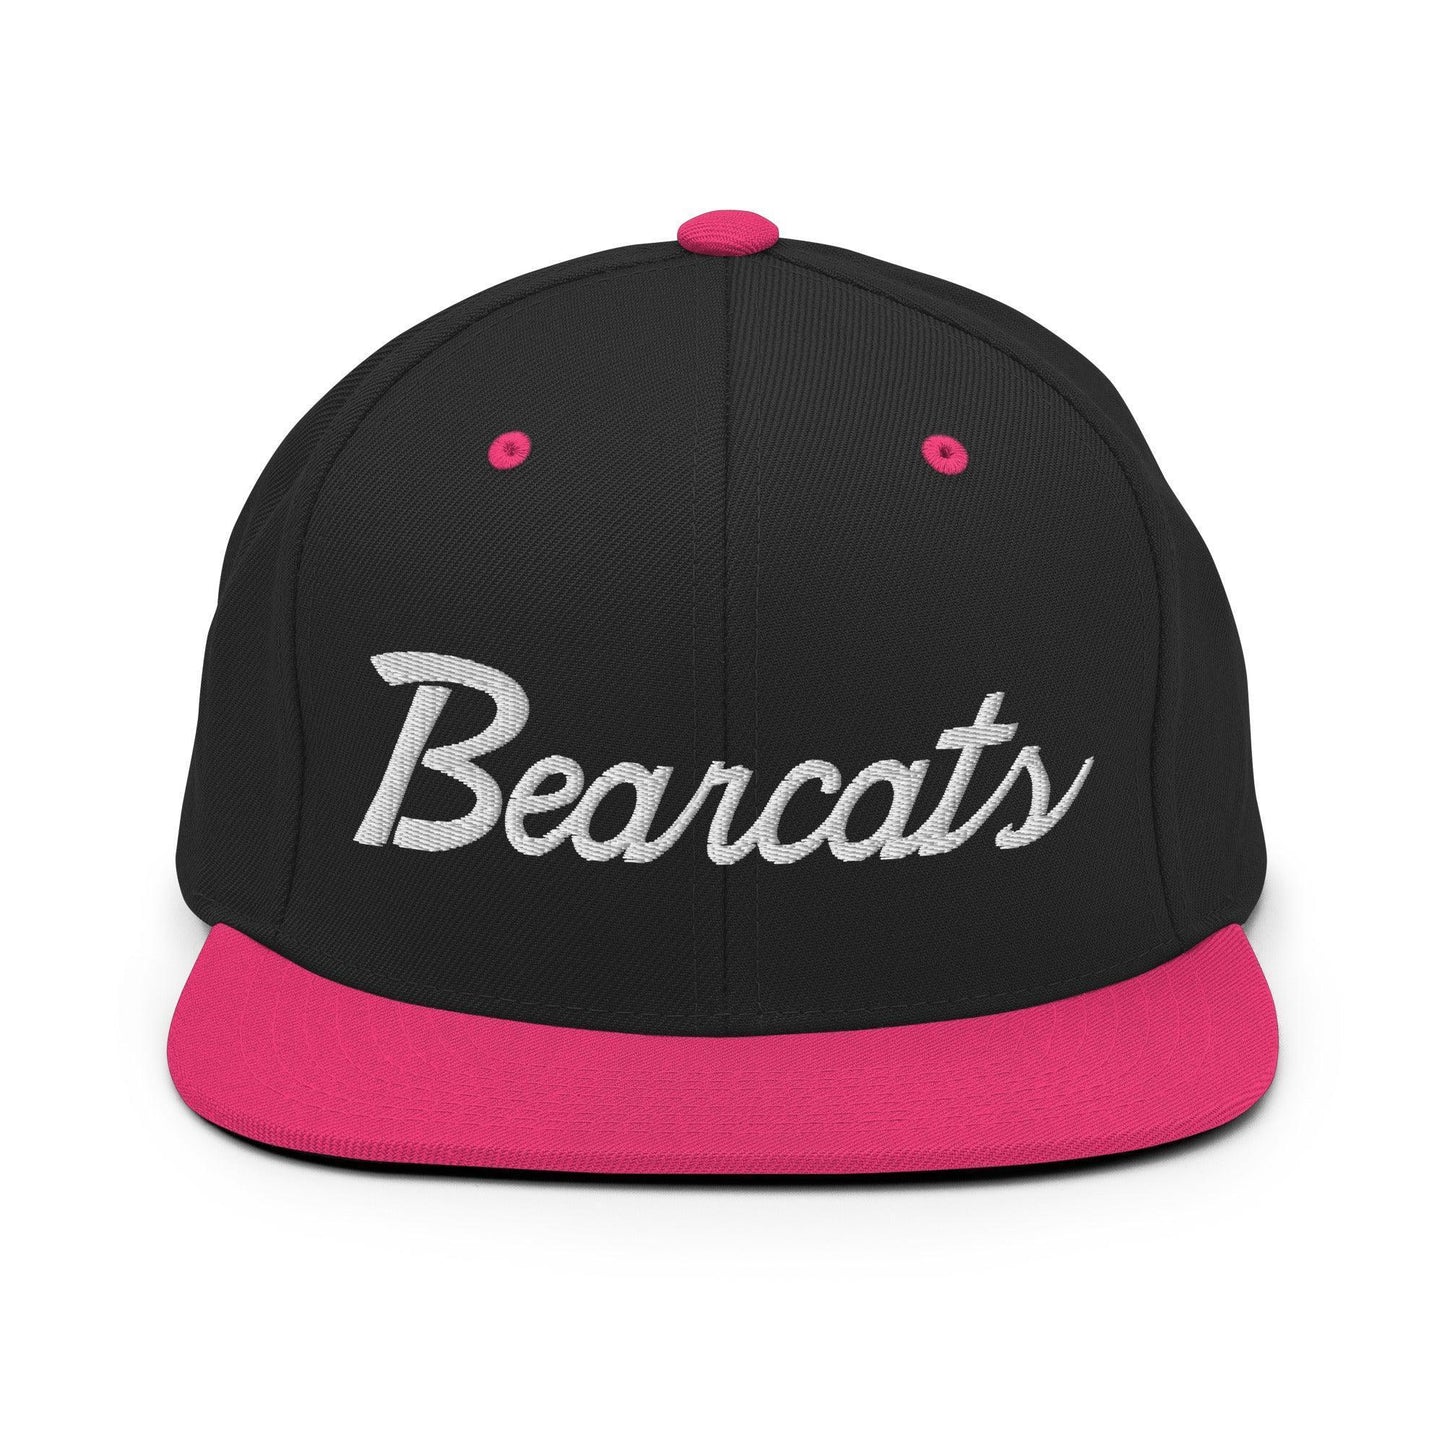 Bearcats School Mascot Script Snapback Hat Black Neon Pink